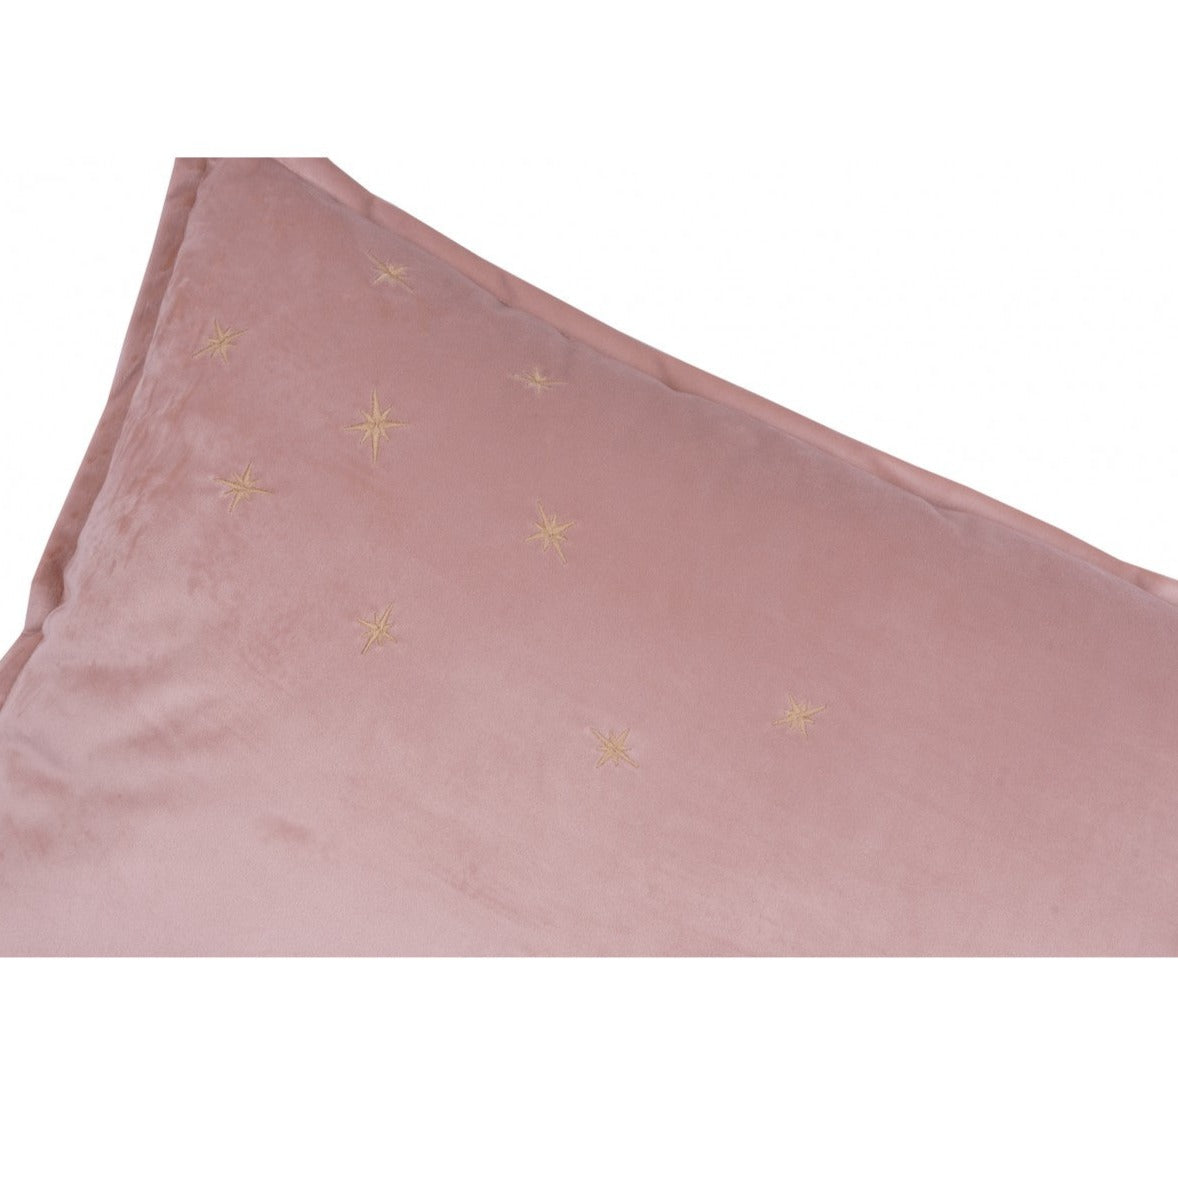 Personalised Luxury Velvet Cushion - Powder Pink